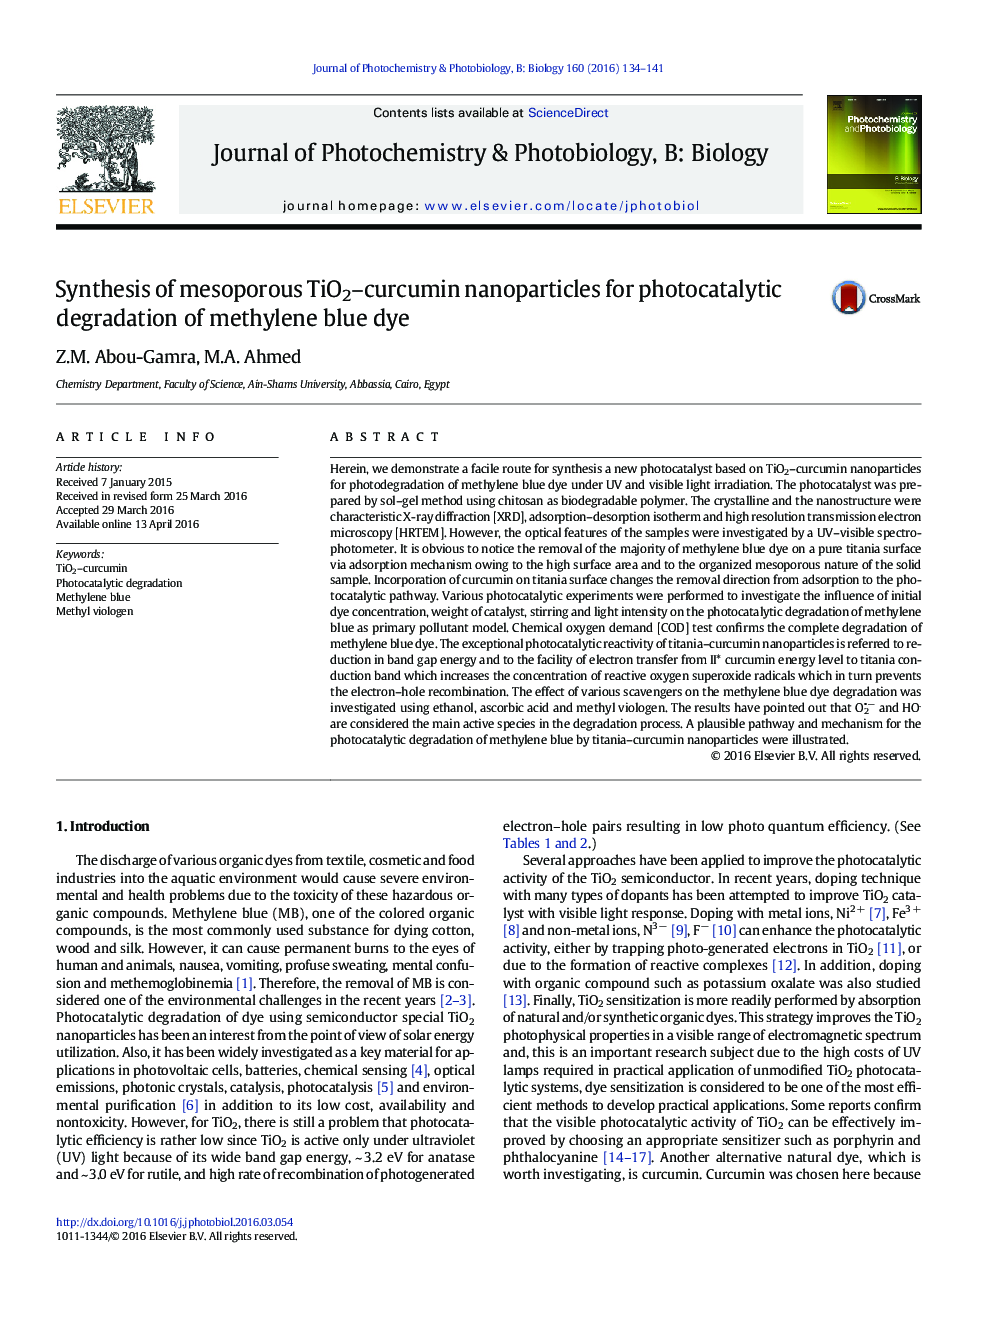 Synthesis of mesoporous TiO2–curcumin nanoparticles for photocatalytic degradation of methylene blue dye